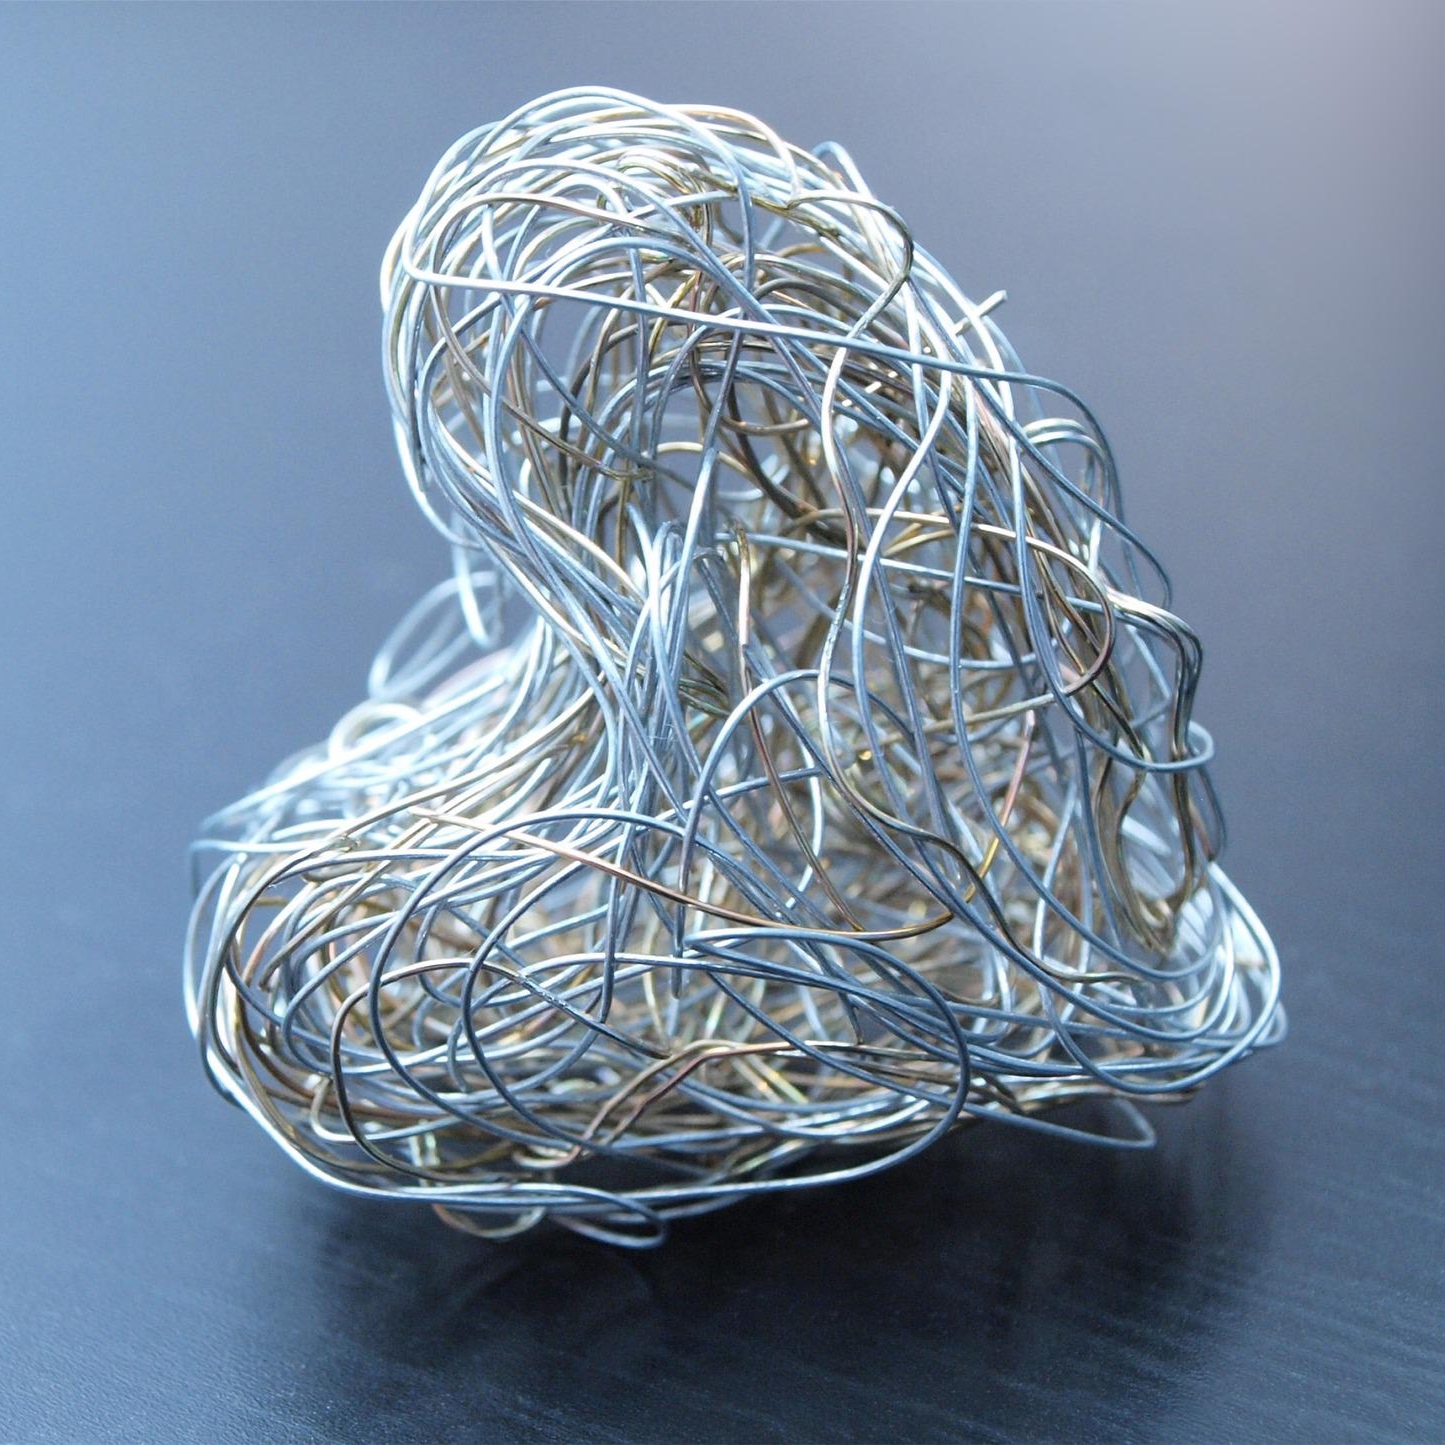 entangled heart, Silvo Bilinski, piaxabay.com